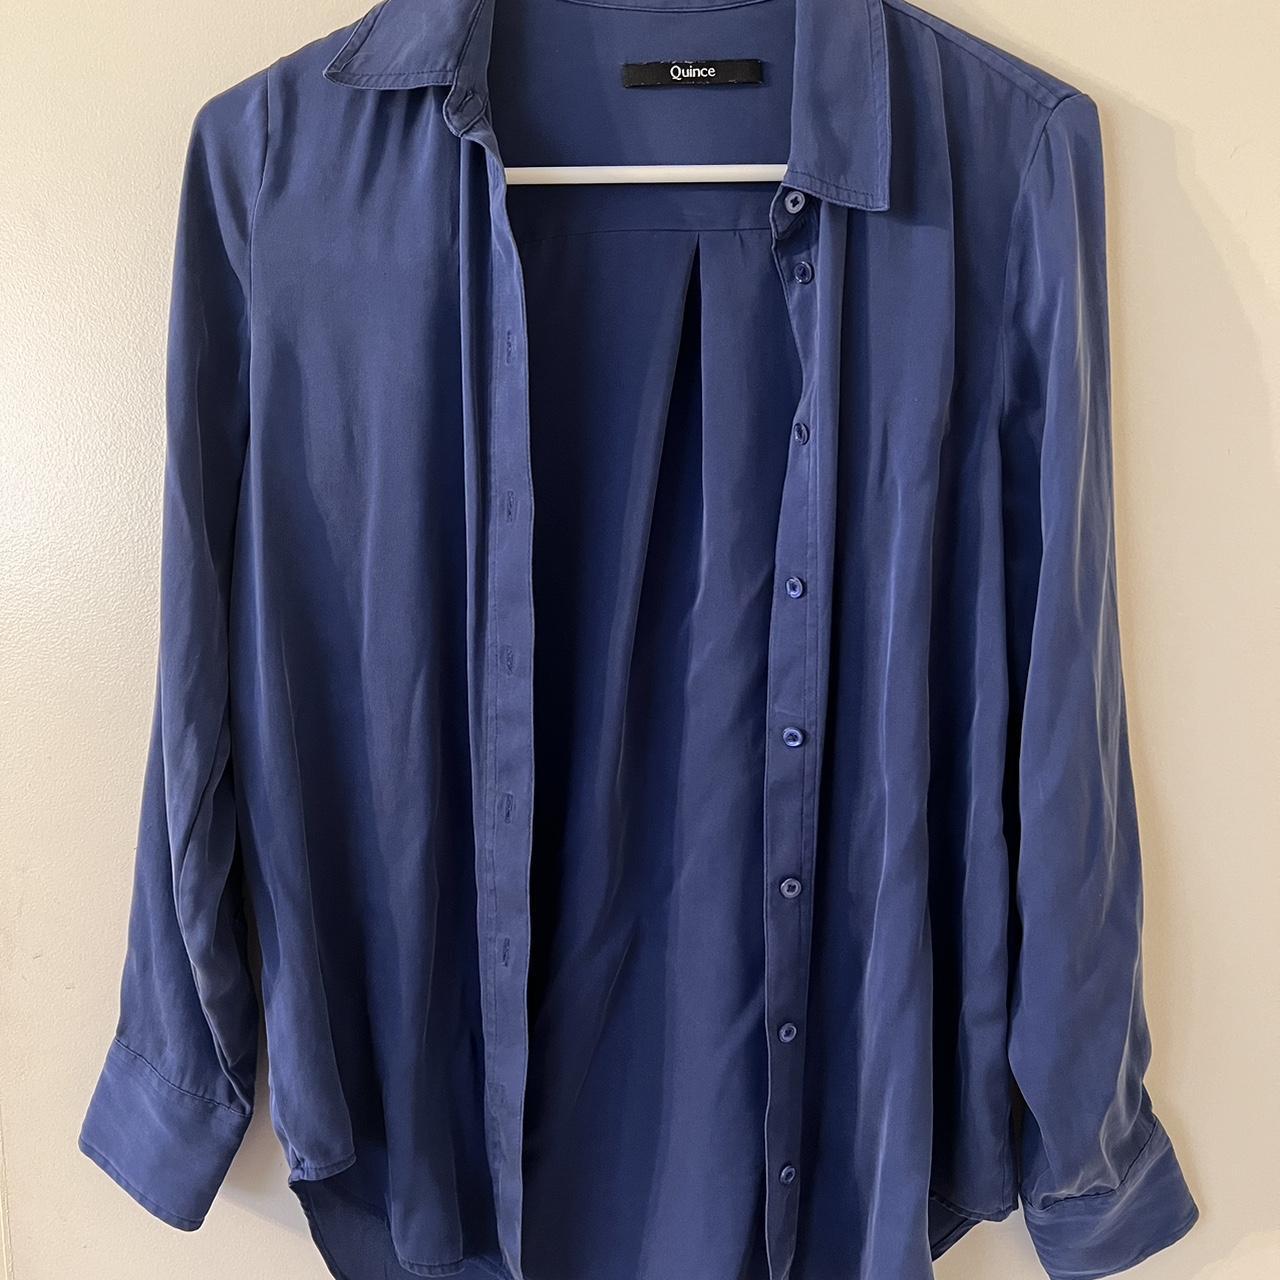 Quince blue silk blouse size xs. Quince does... - Depop